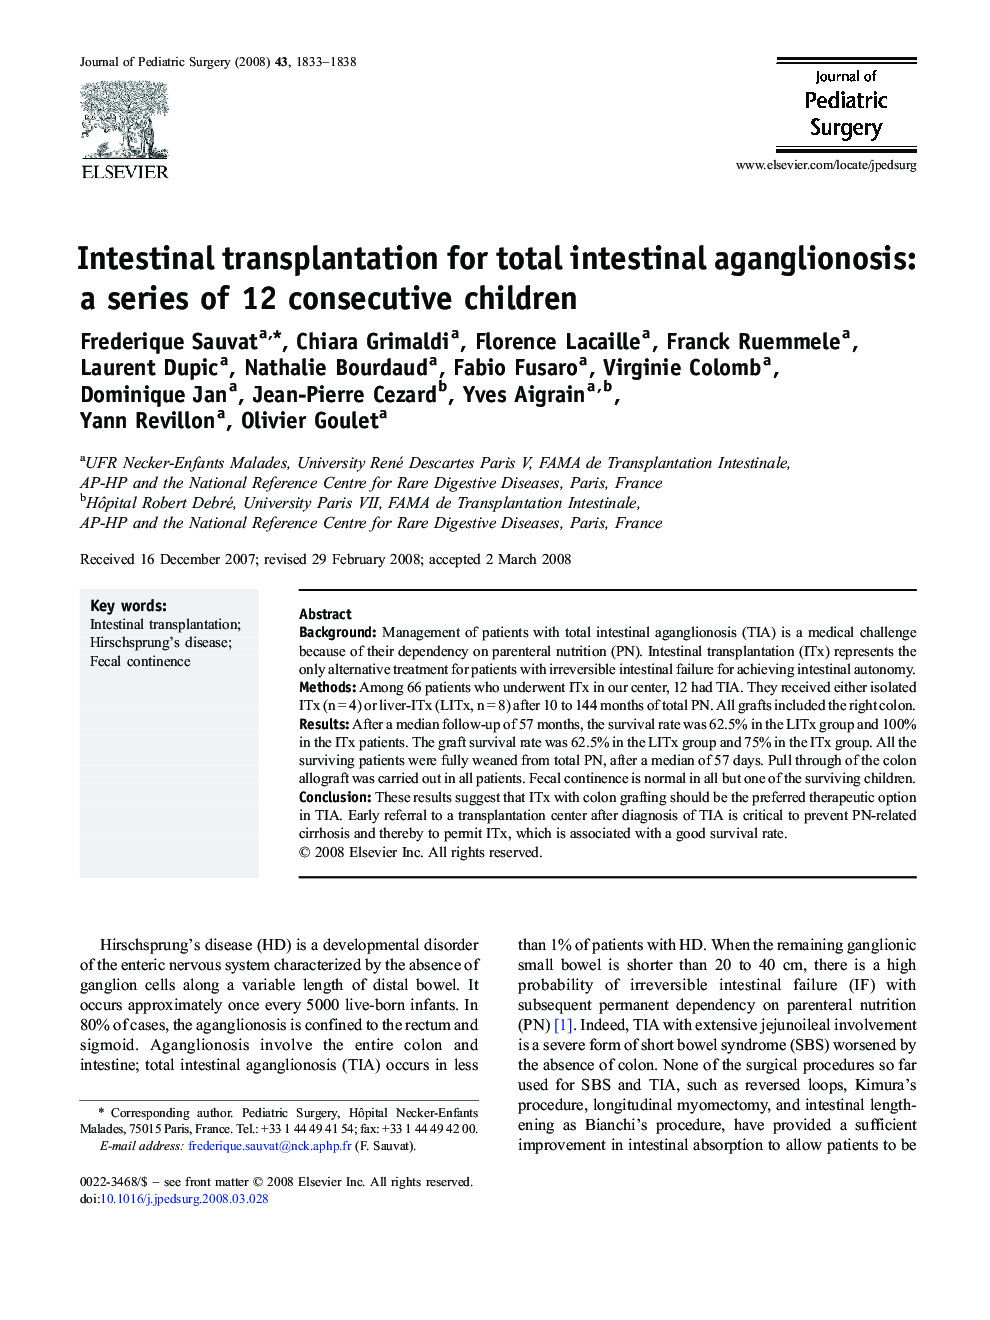 Intestinal transplantation for total intestinal aganglionosis: a series of 12 consecutive children